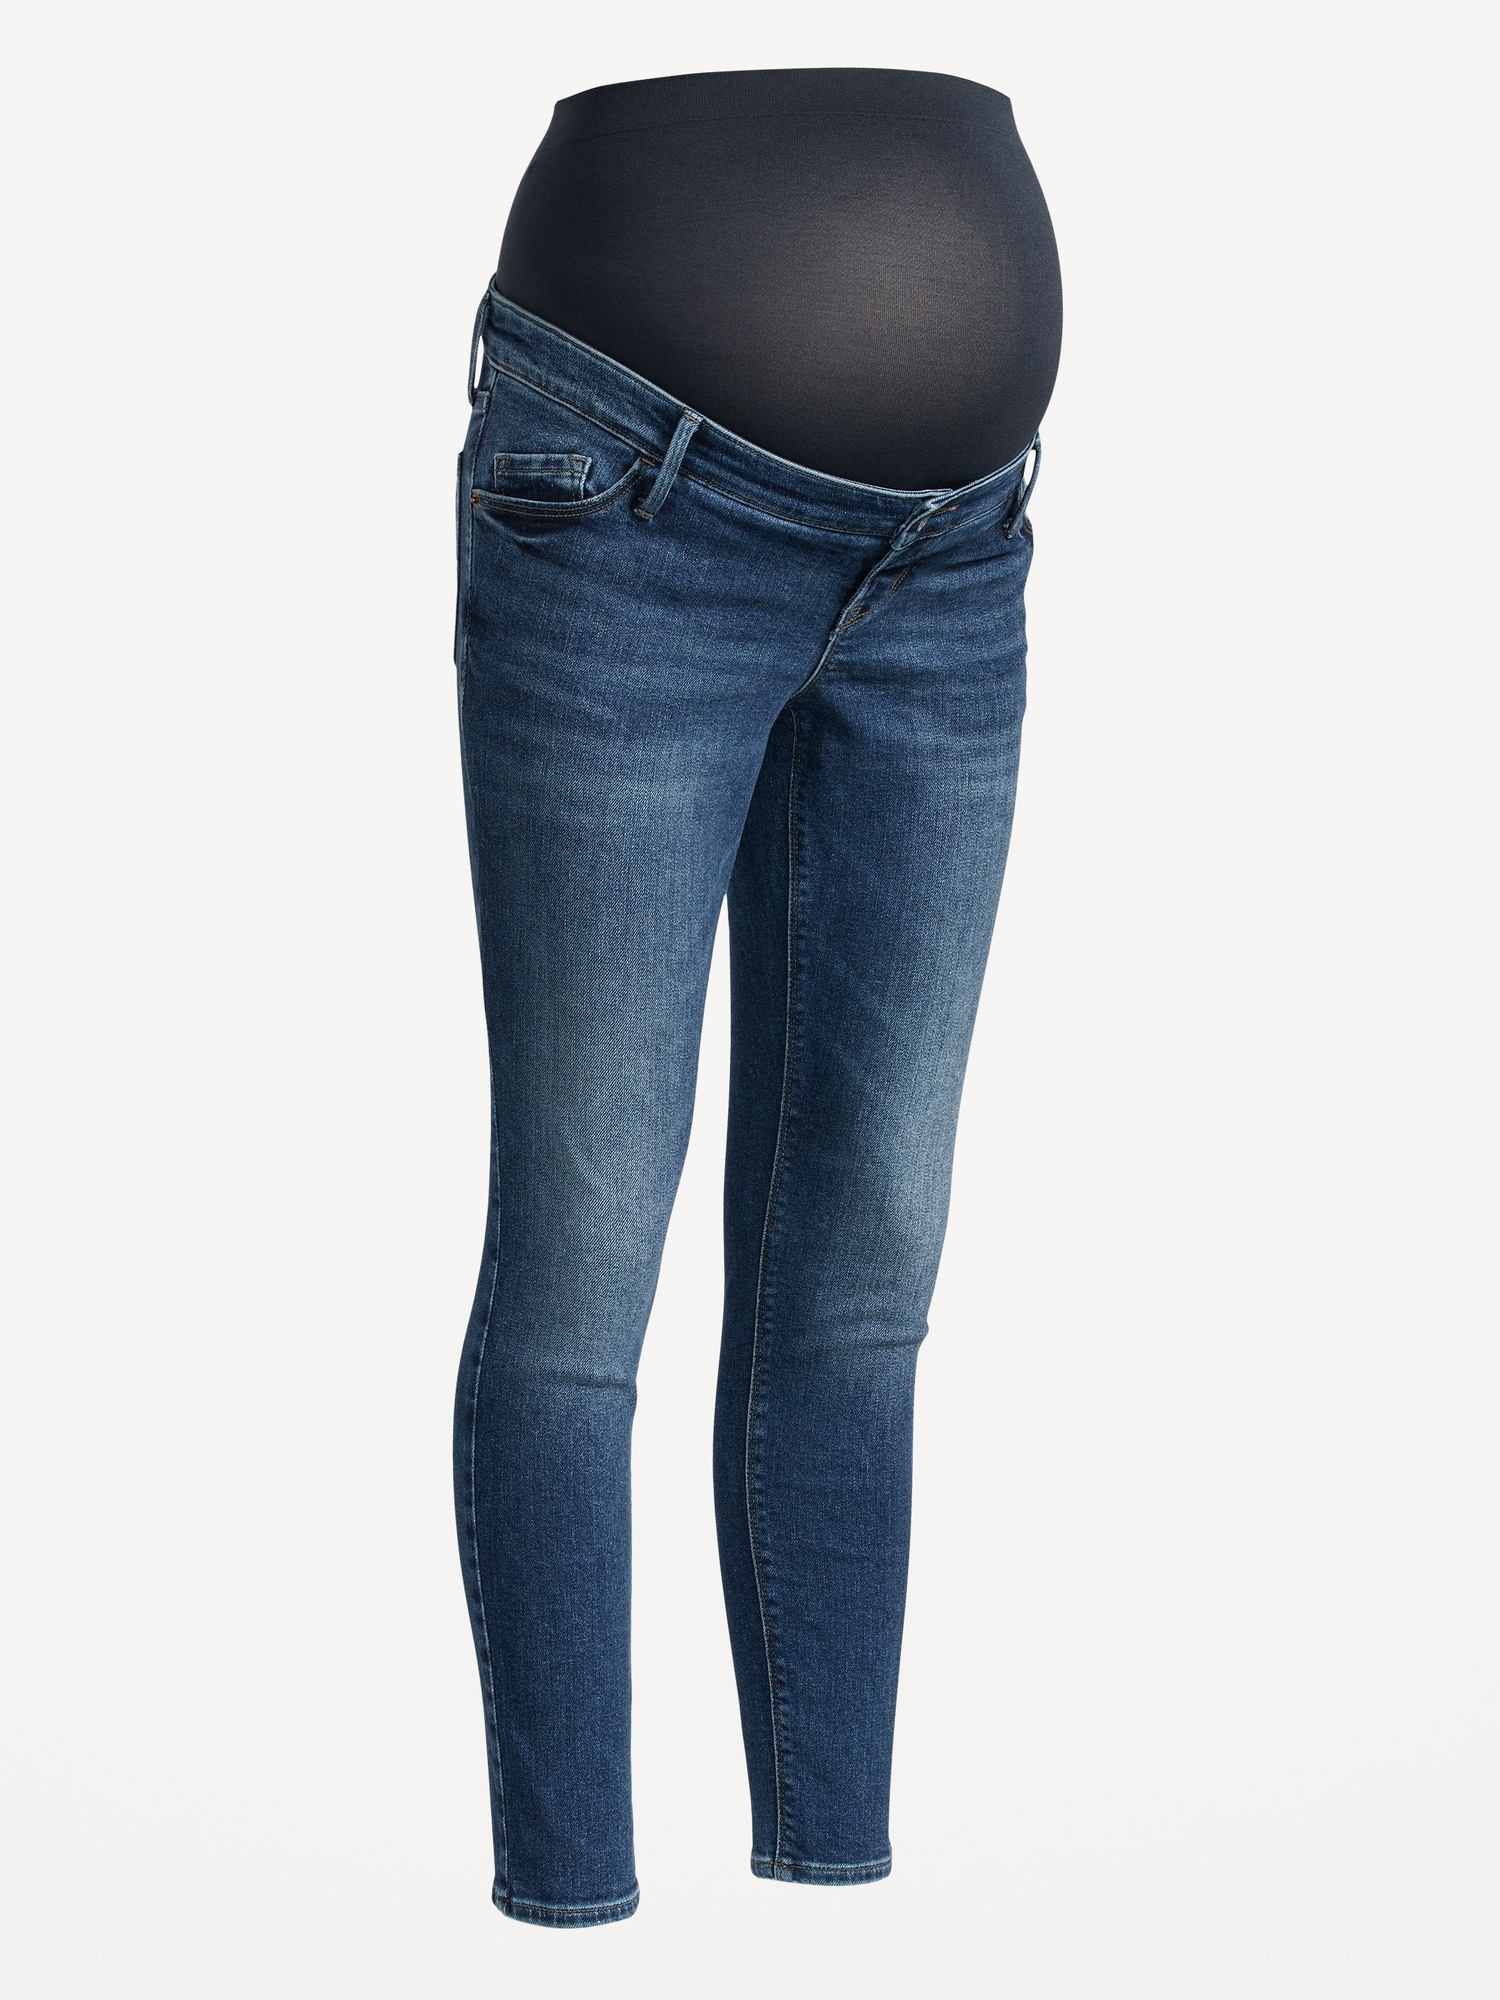 Maternity Full-Panel Rockstar Super Skinny Jeans